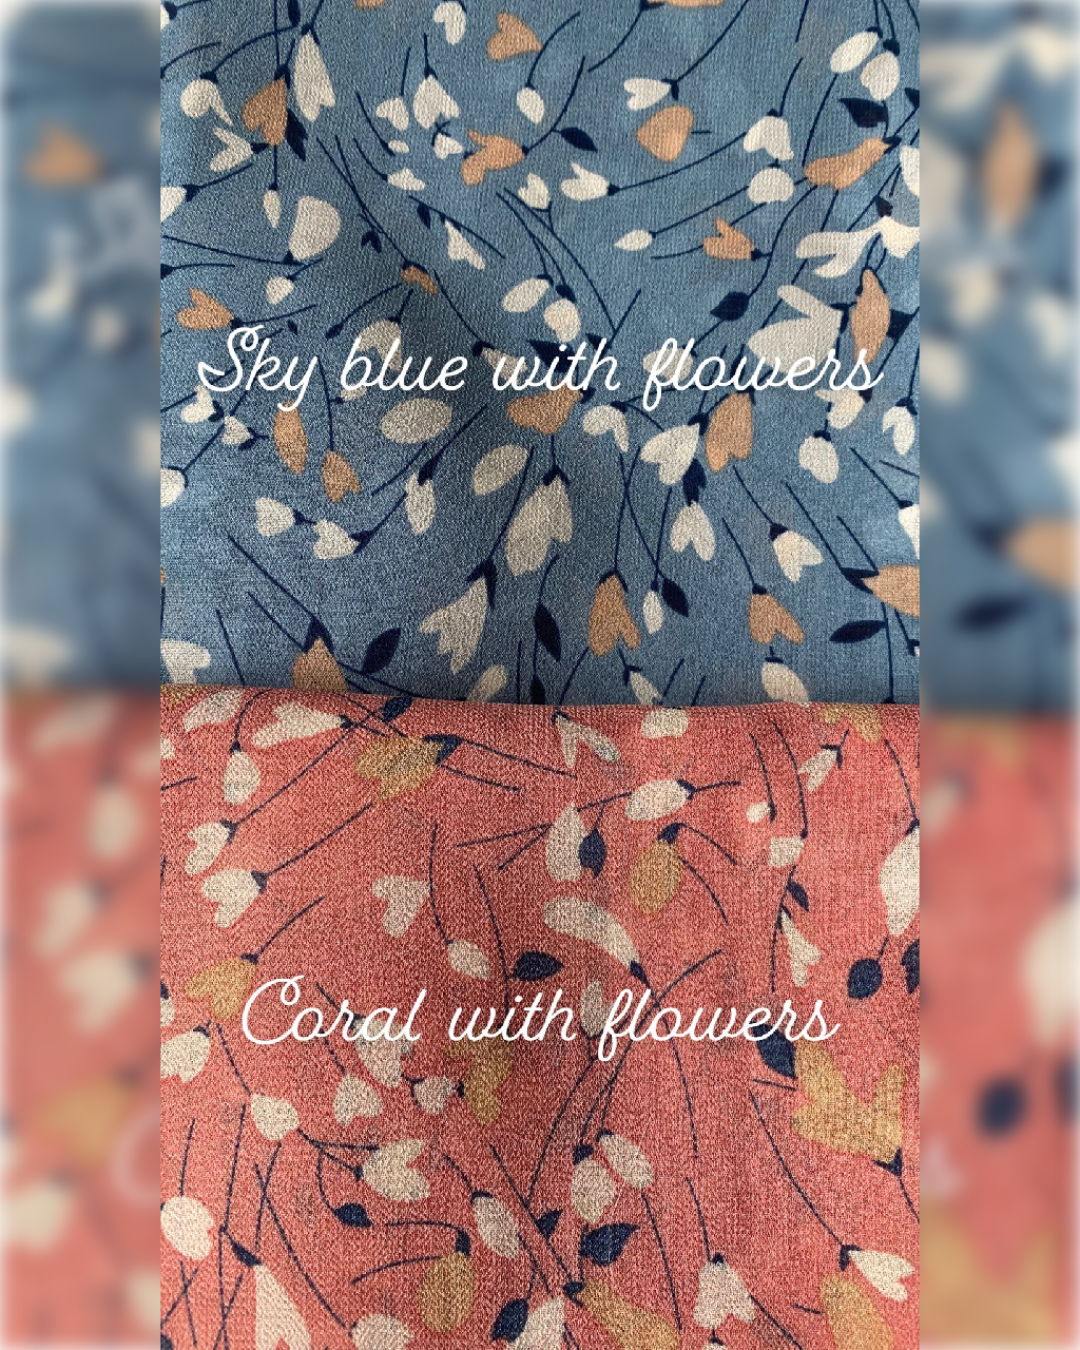 Naya Georgette Hijabs in Beautiful Sky Blue / Coral Tones with Floral Prints حجابات نايا الجورجيت باللون الأزرق السماوي أو المرجاني و بنقشة الورود الناعمة